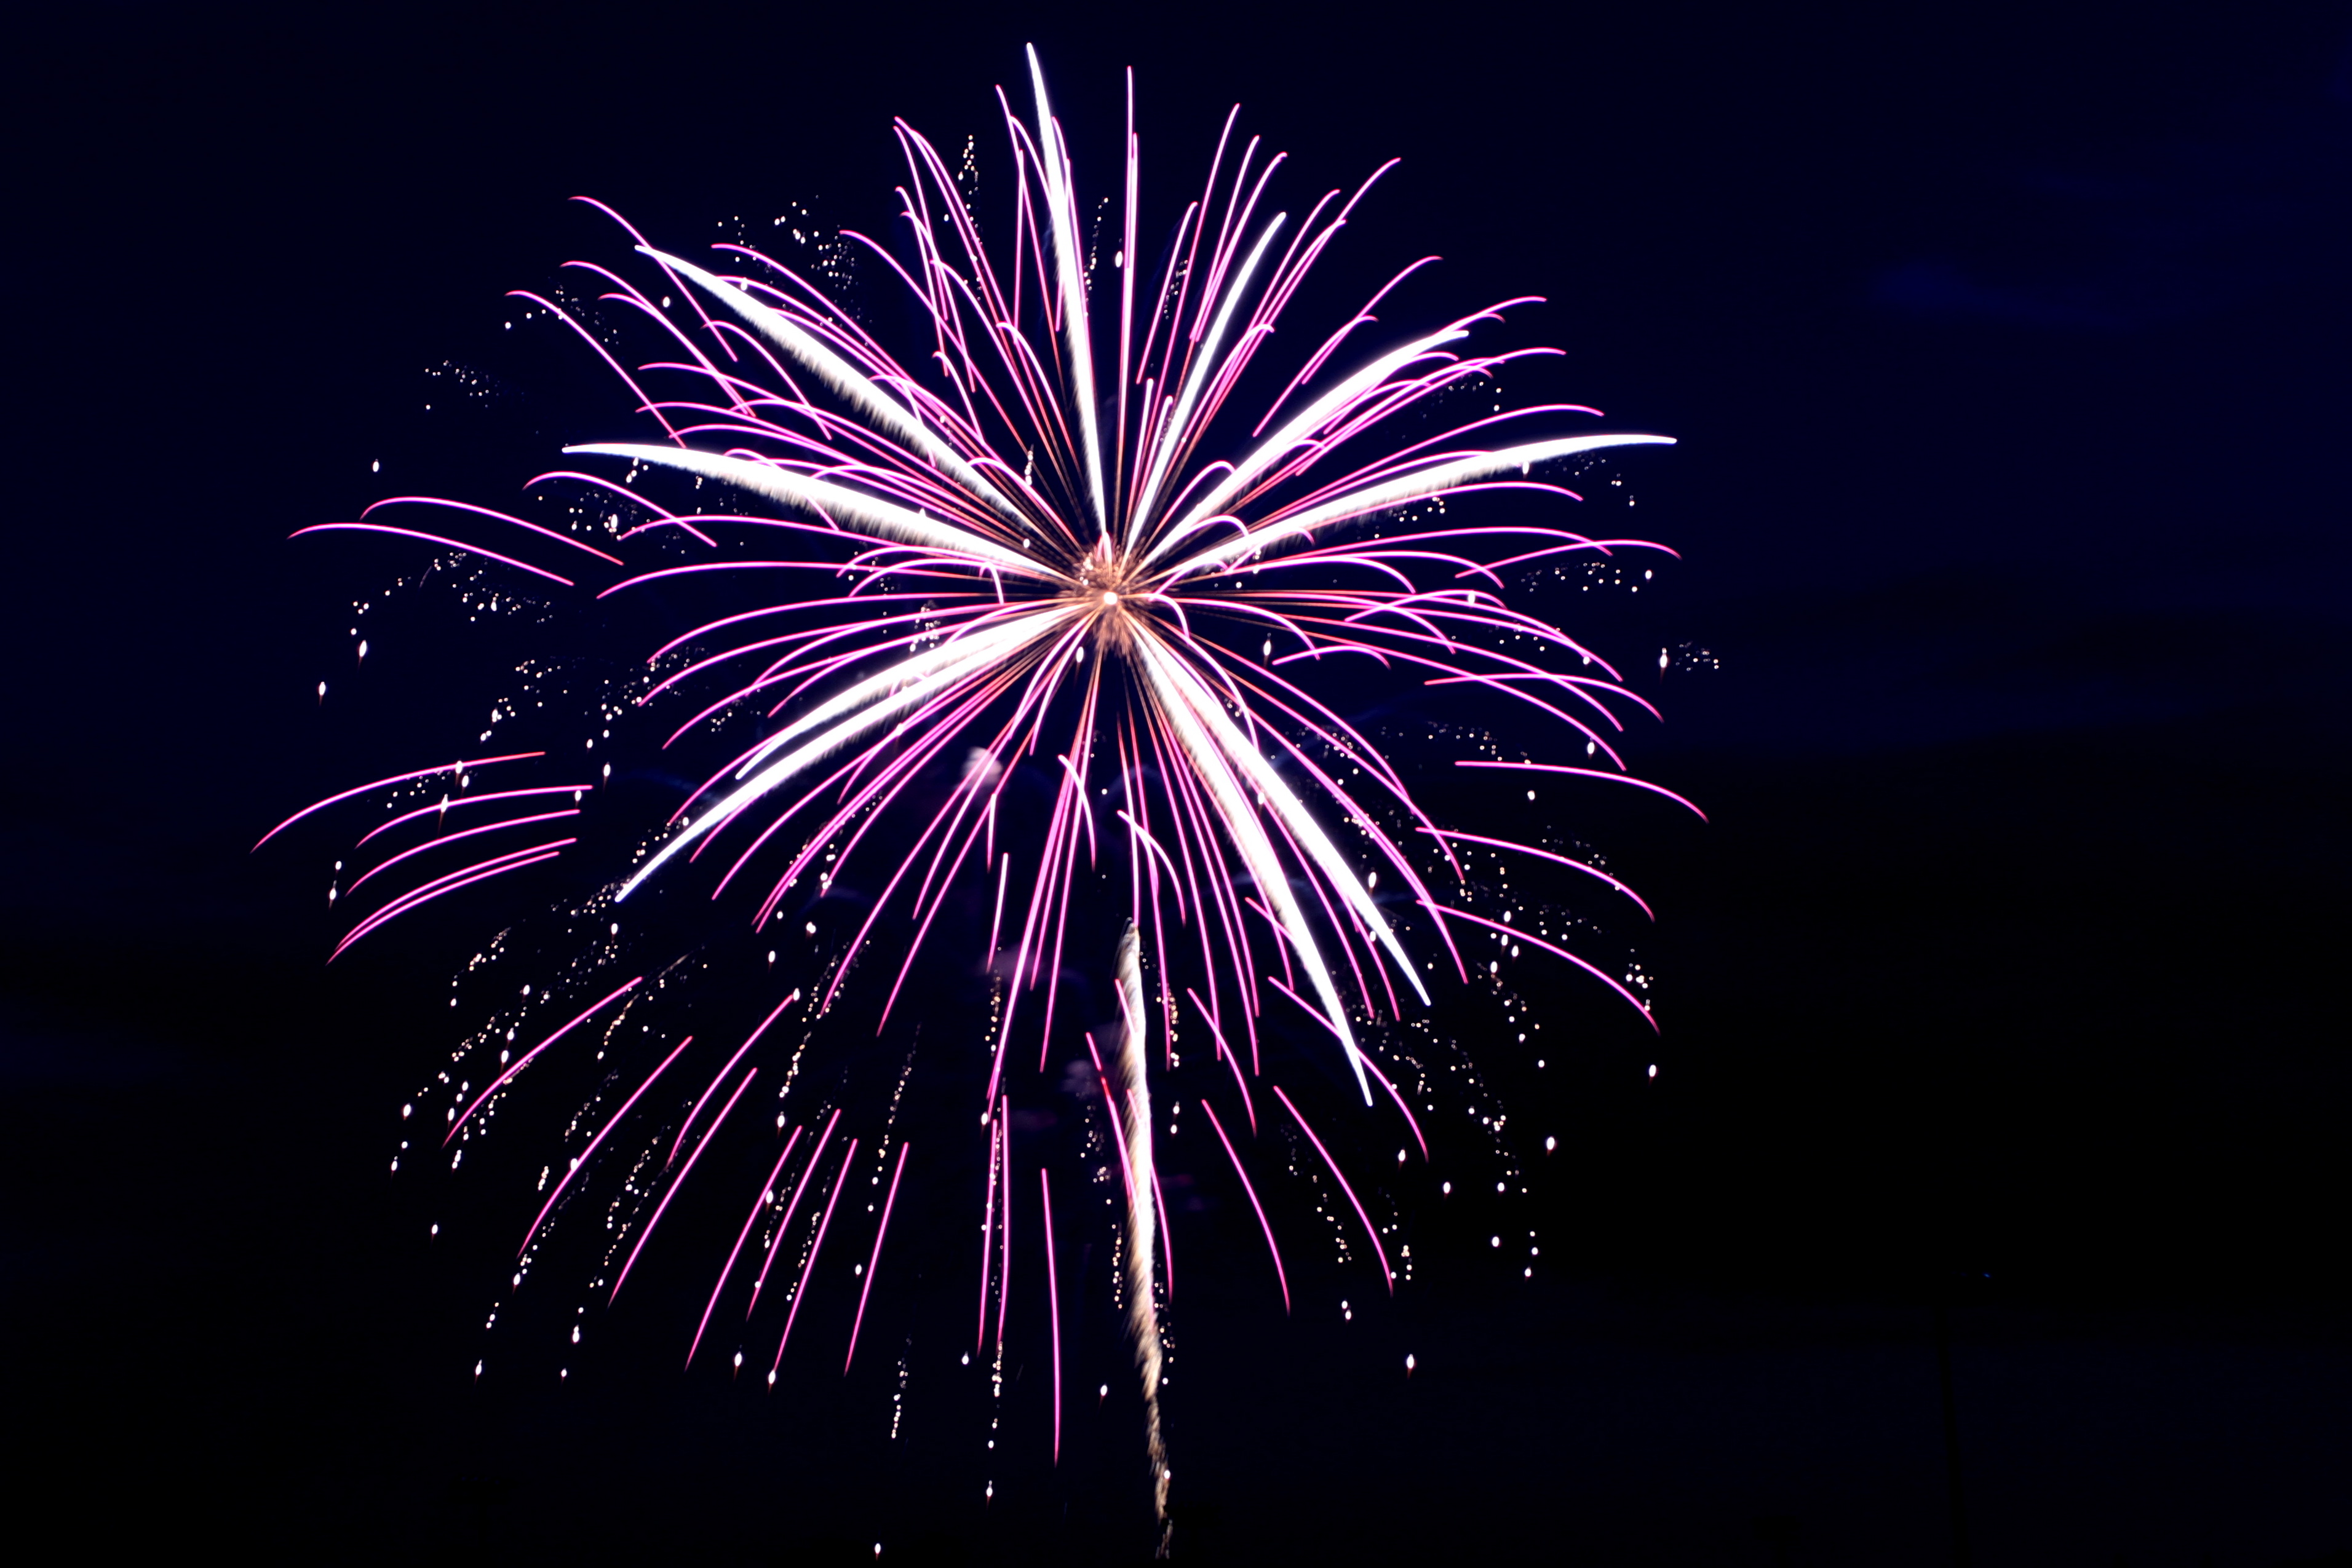 LA CROSSE SKYROCKER'S Fireworks show COUNTDOWN TO NEW YEAR'S EVE